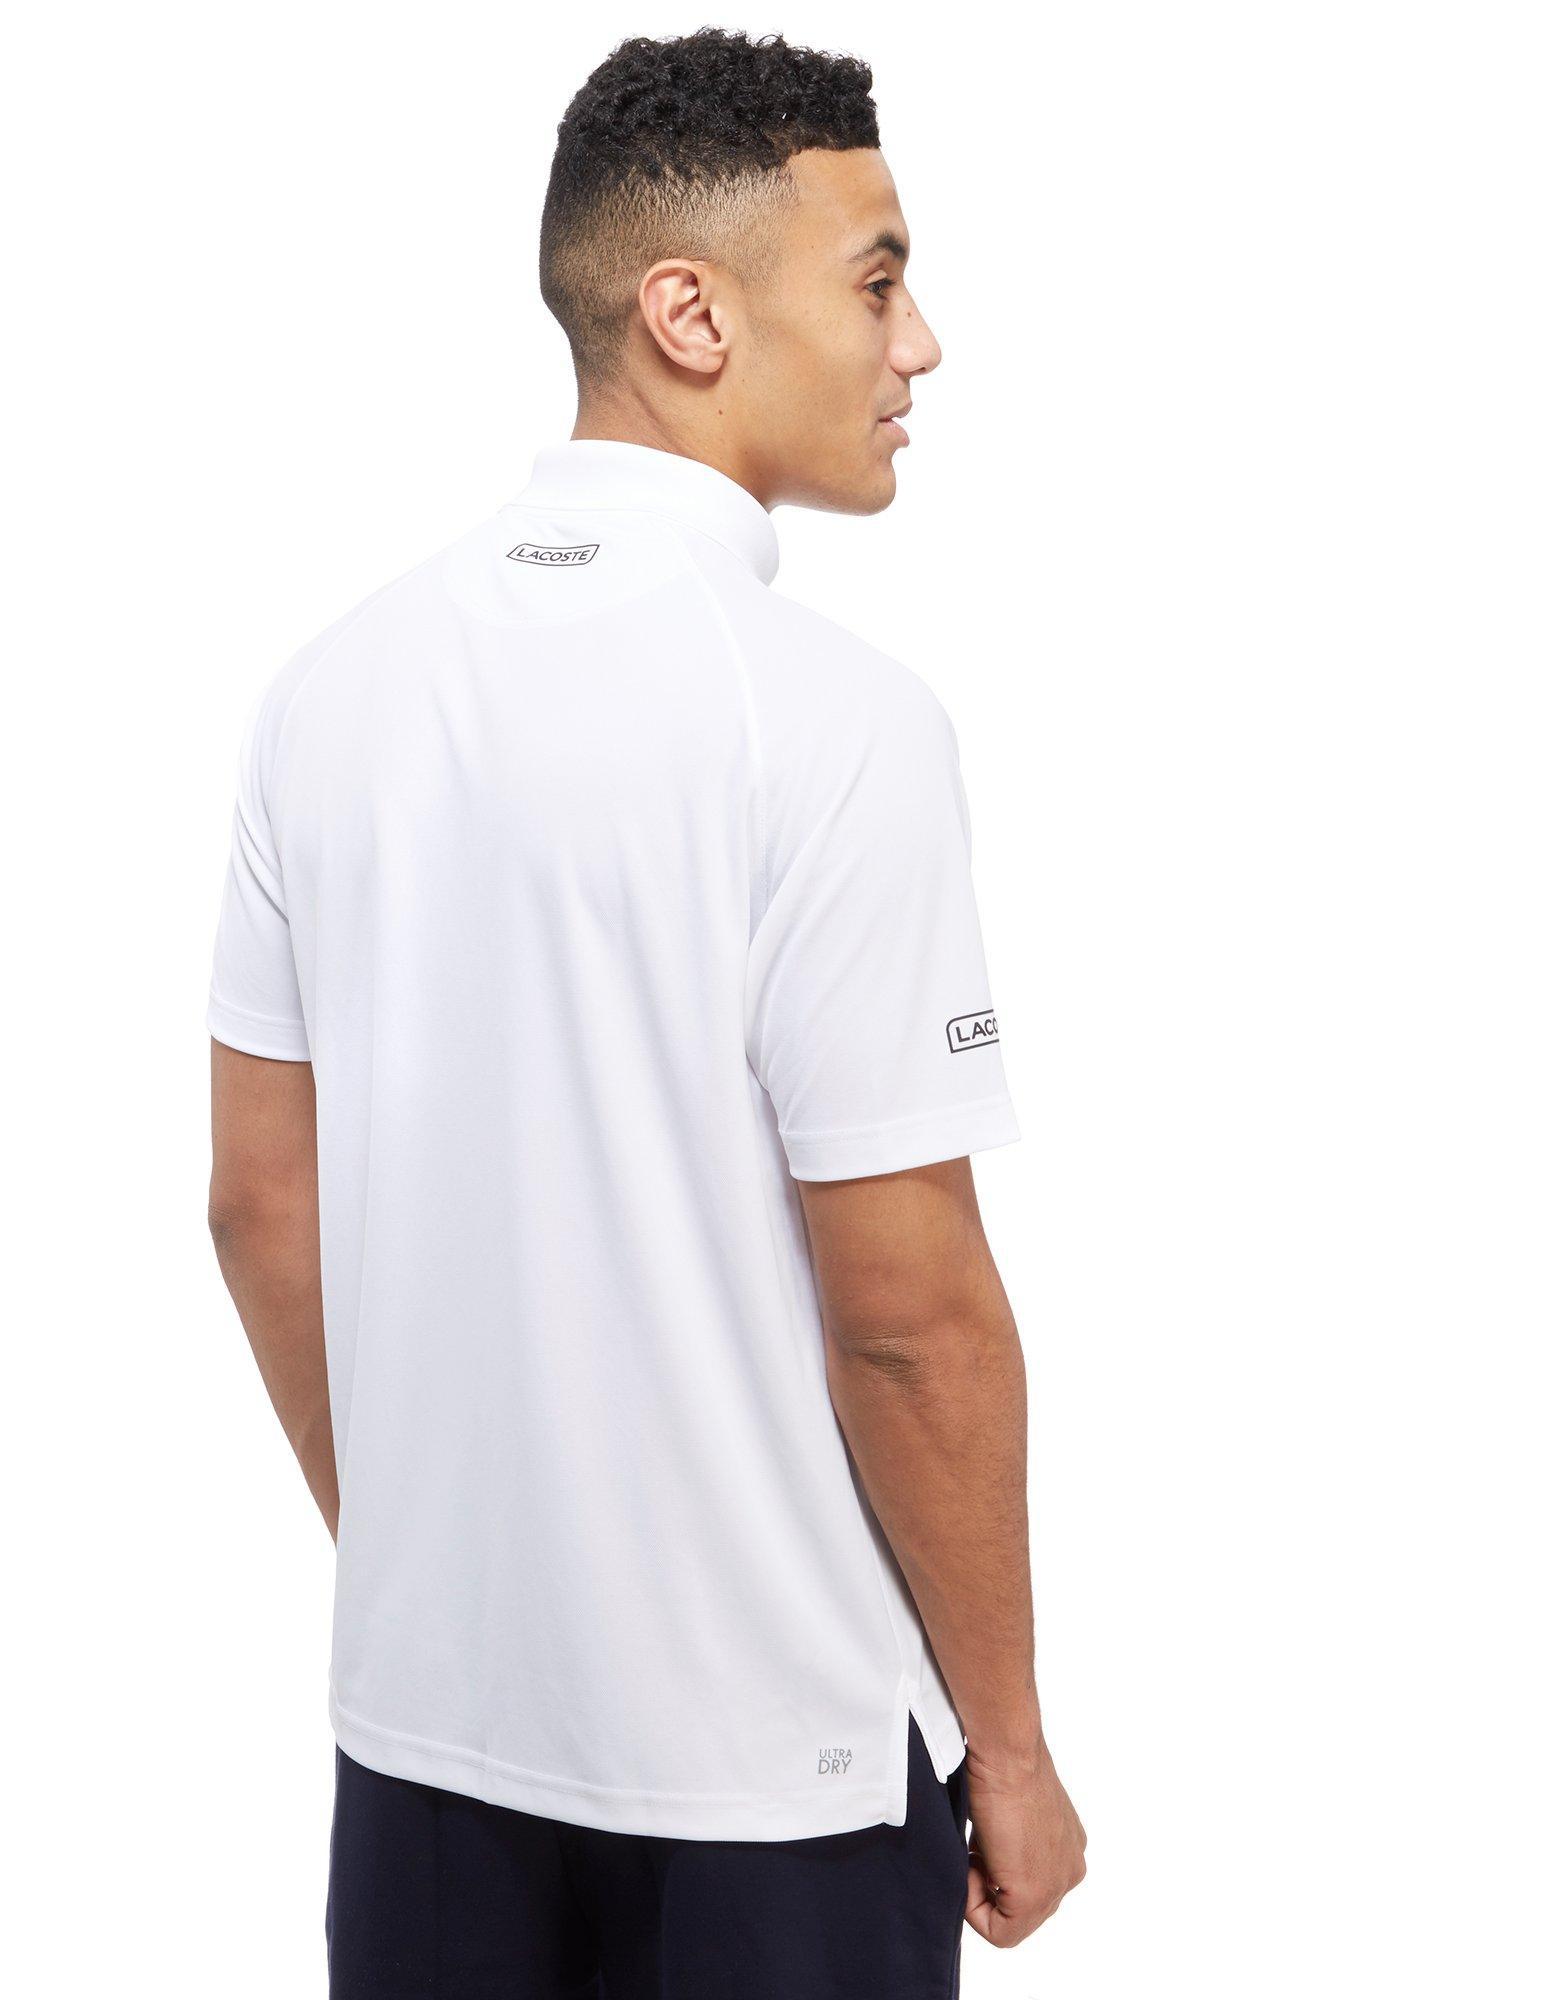 Lacoste Cotton Novak Plain Polo Shirt in White for Men - Lyst